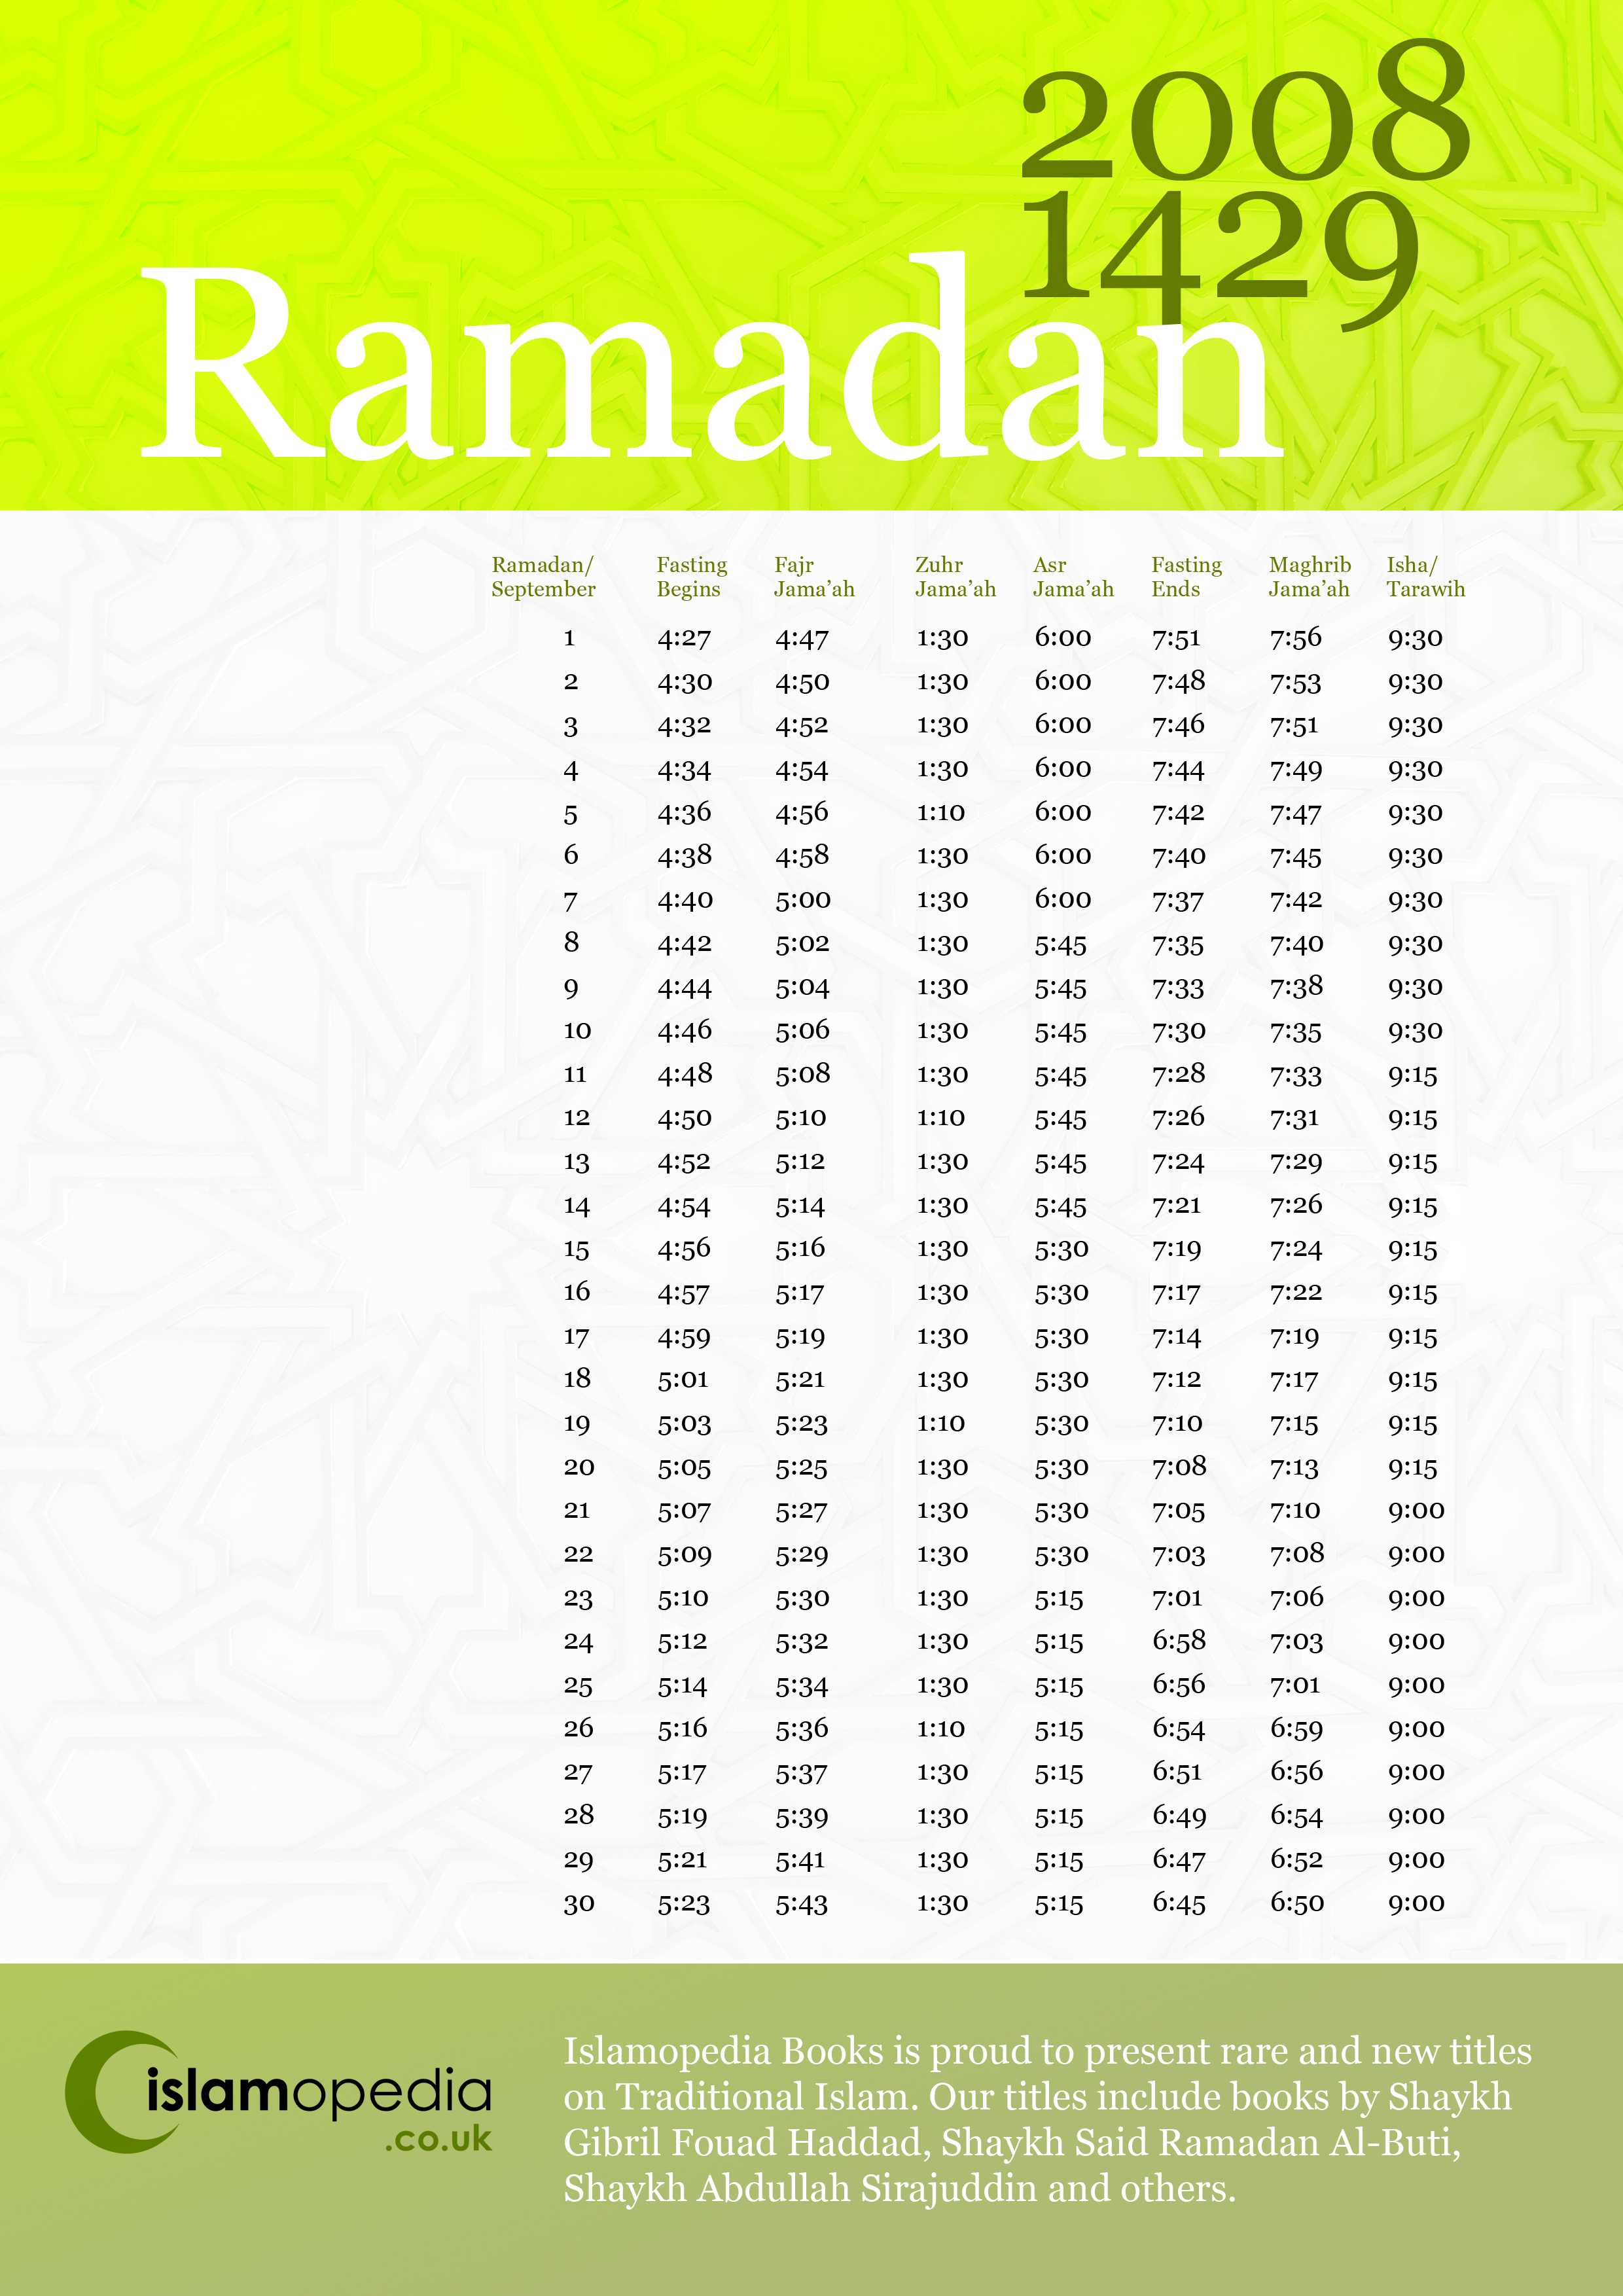 Islamopedia Ramadan 1429 (2008) Timetable For London intended for Islamic Calendar 2008